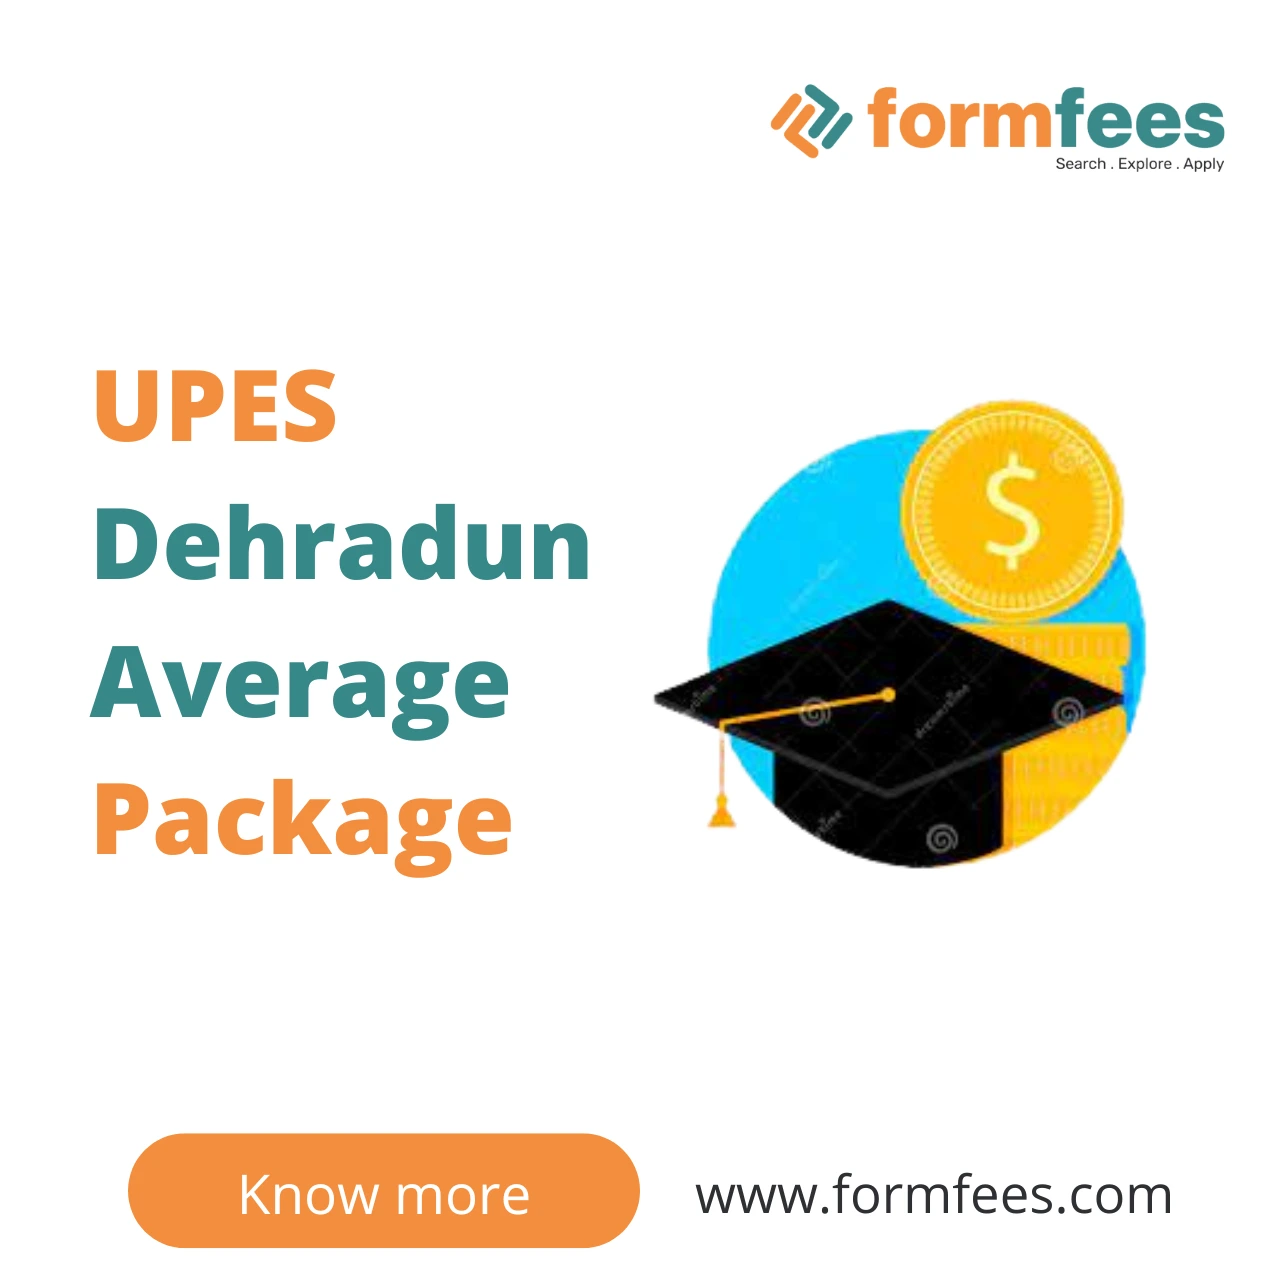 UPES Dehradun Average Package